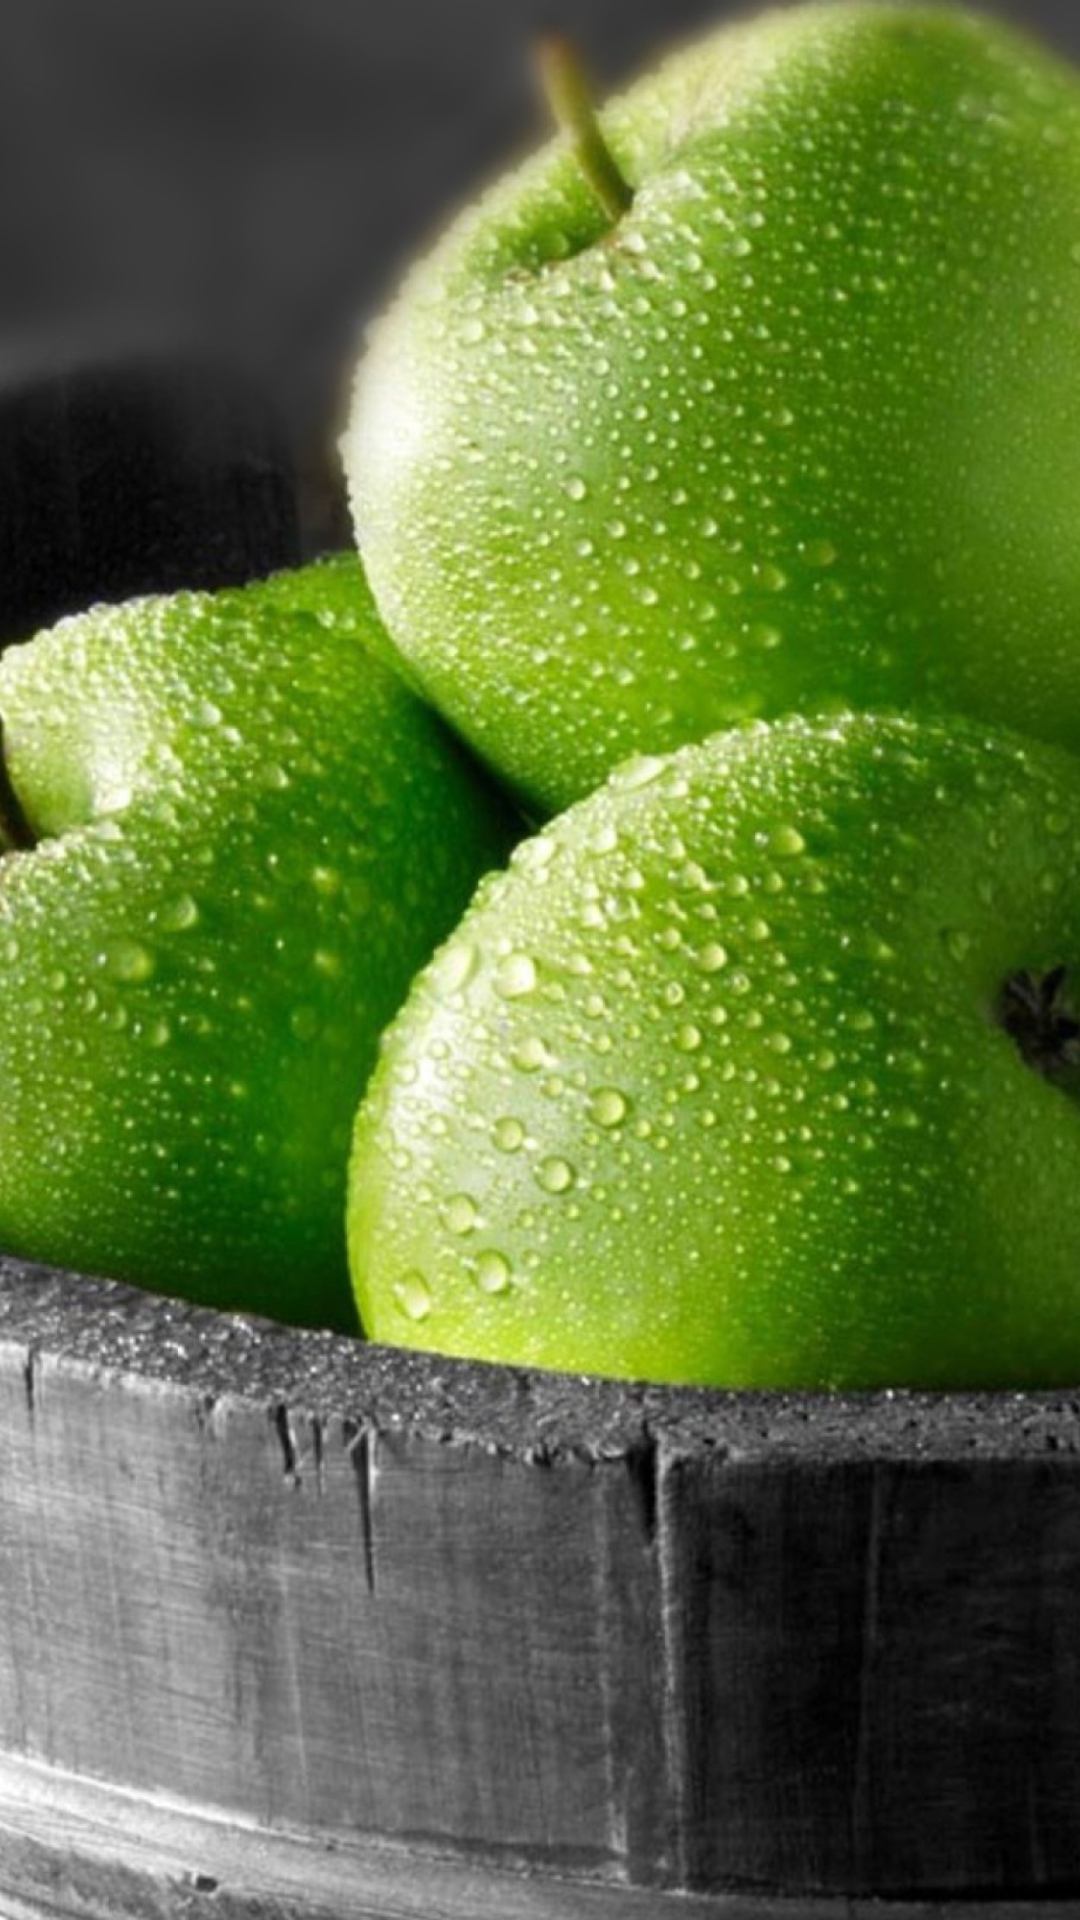 Green Apples wallpaper 1080x1920